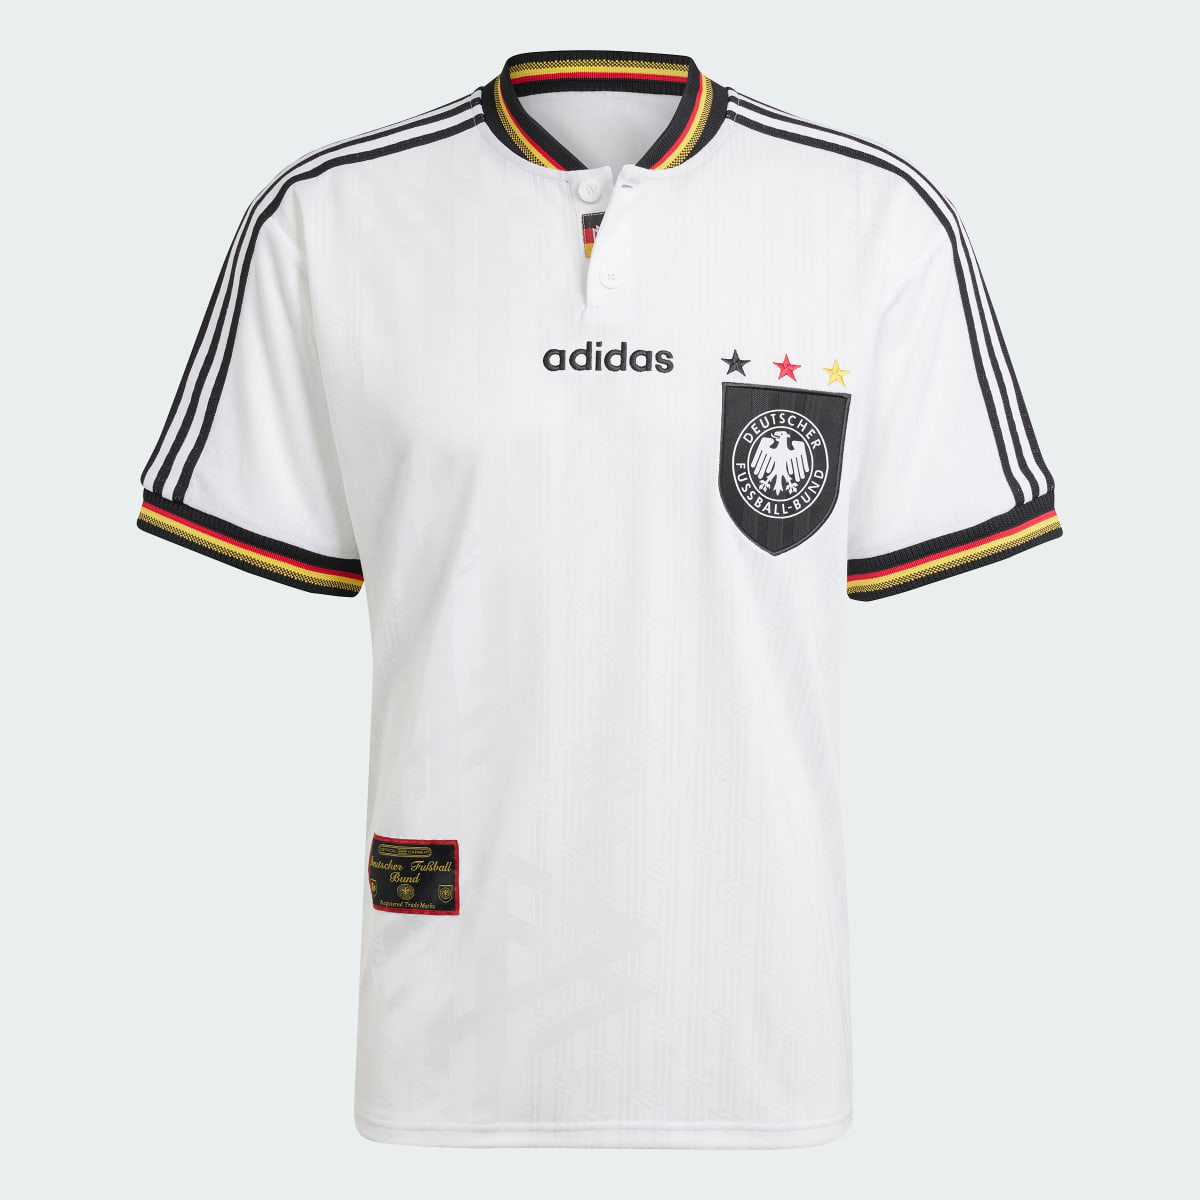 Adidas Germany 1996 Home Jersey. 5